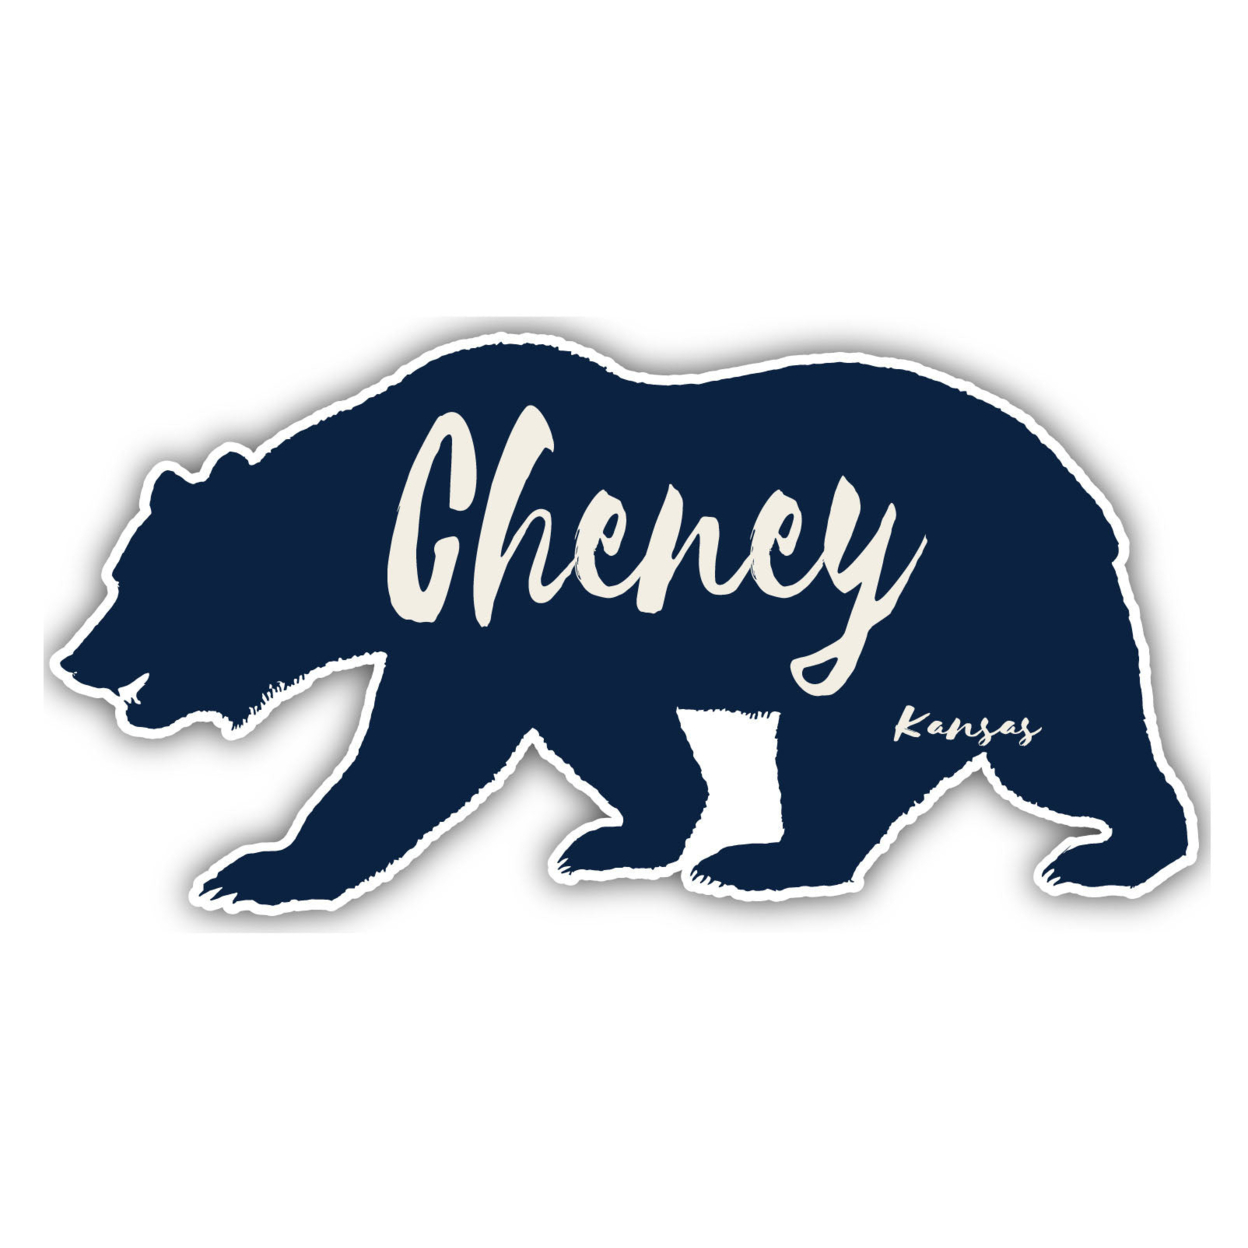 Cheney Kansas Souvenir Decorative Stickers (Choose Theme And Size) - Single Unit, 4-Inch, Bear